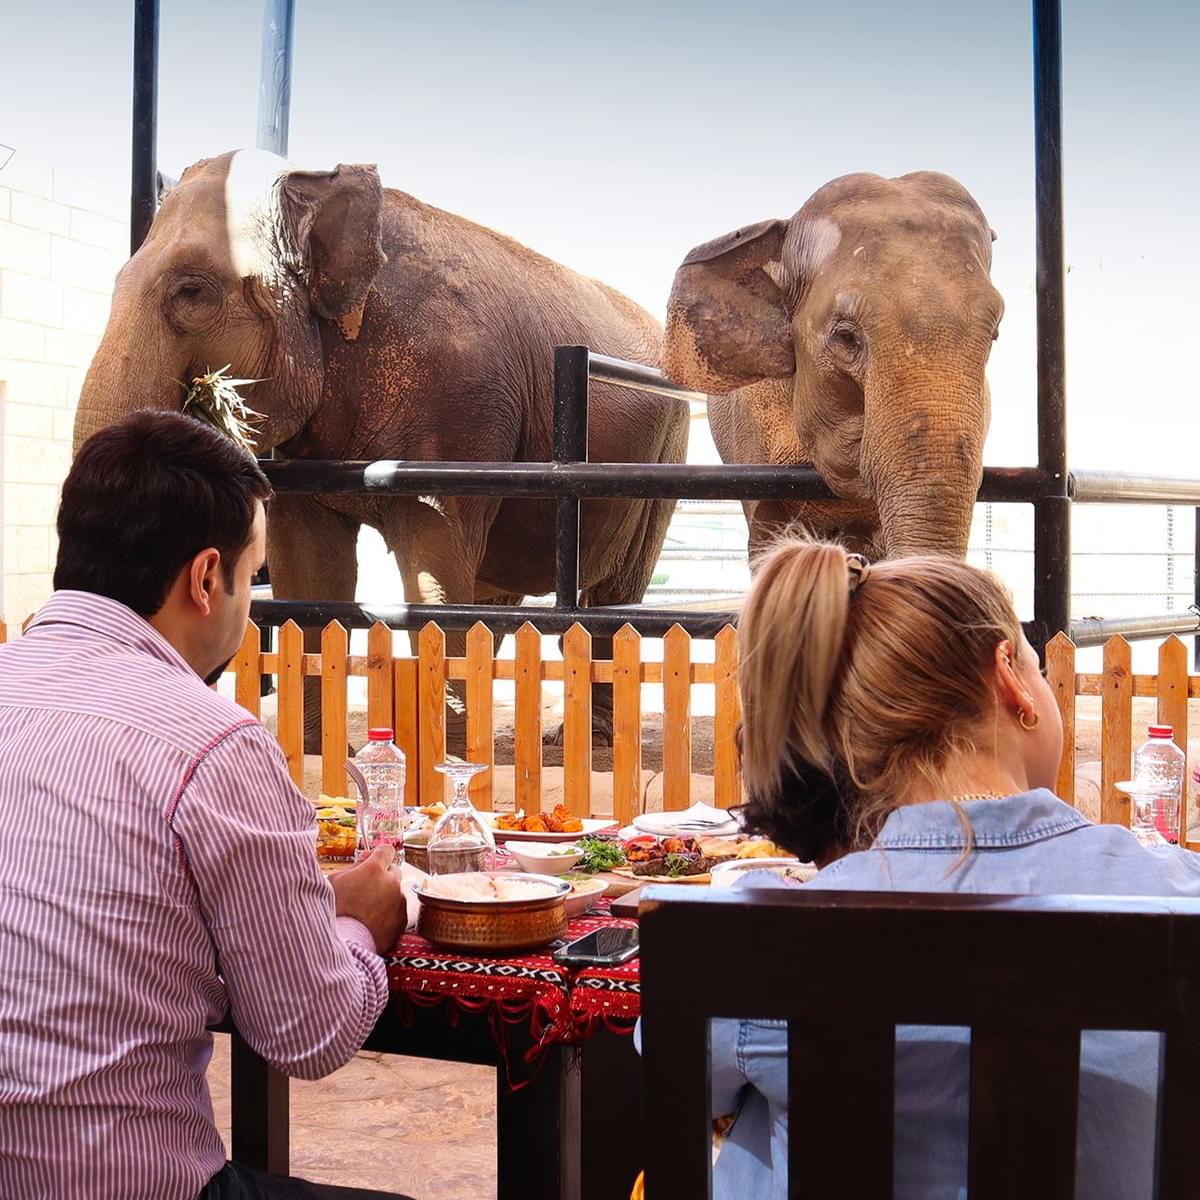 Go for Dinner with Elephants